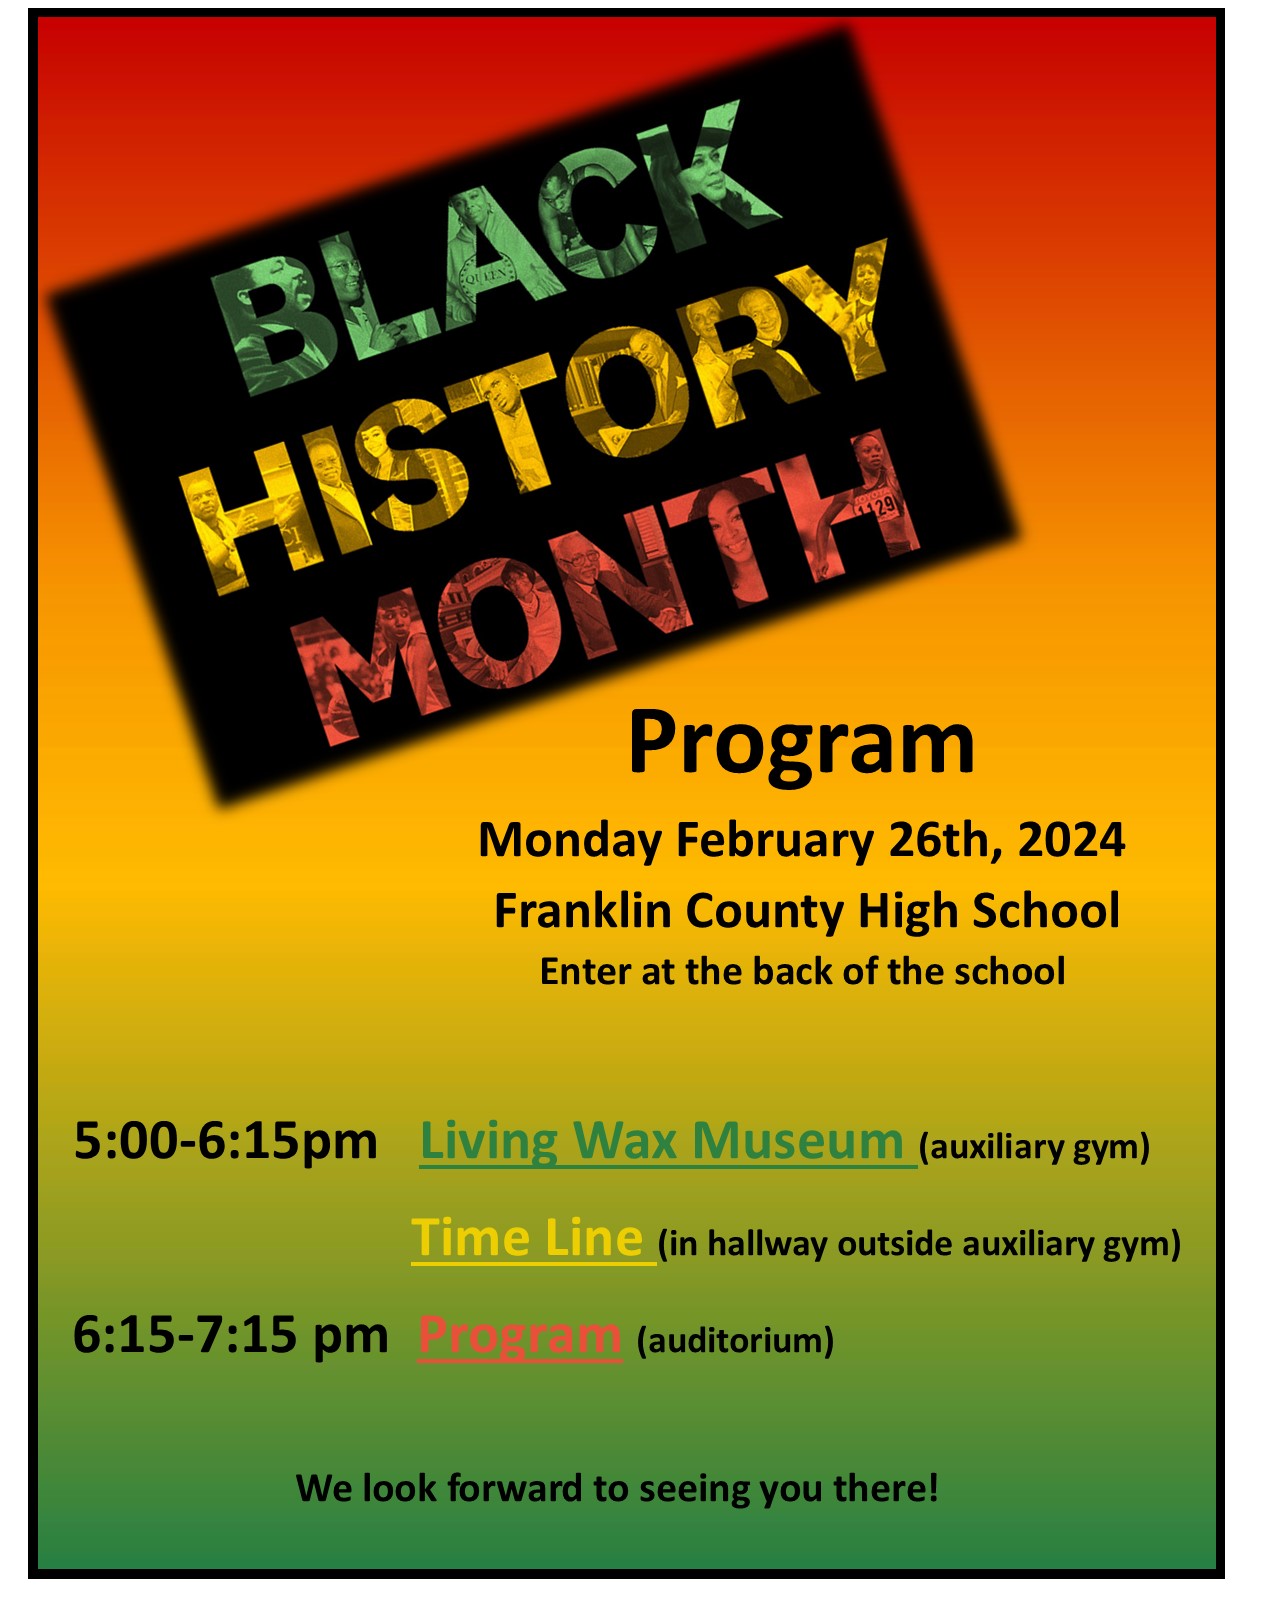 Black History Month program on Feb 26th at FCHS